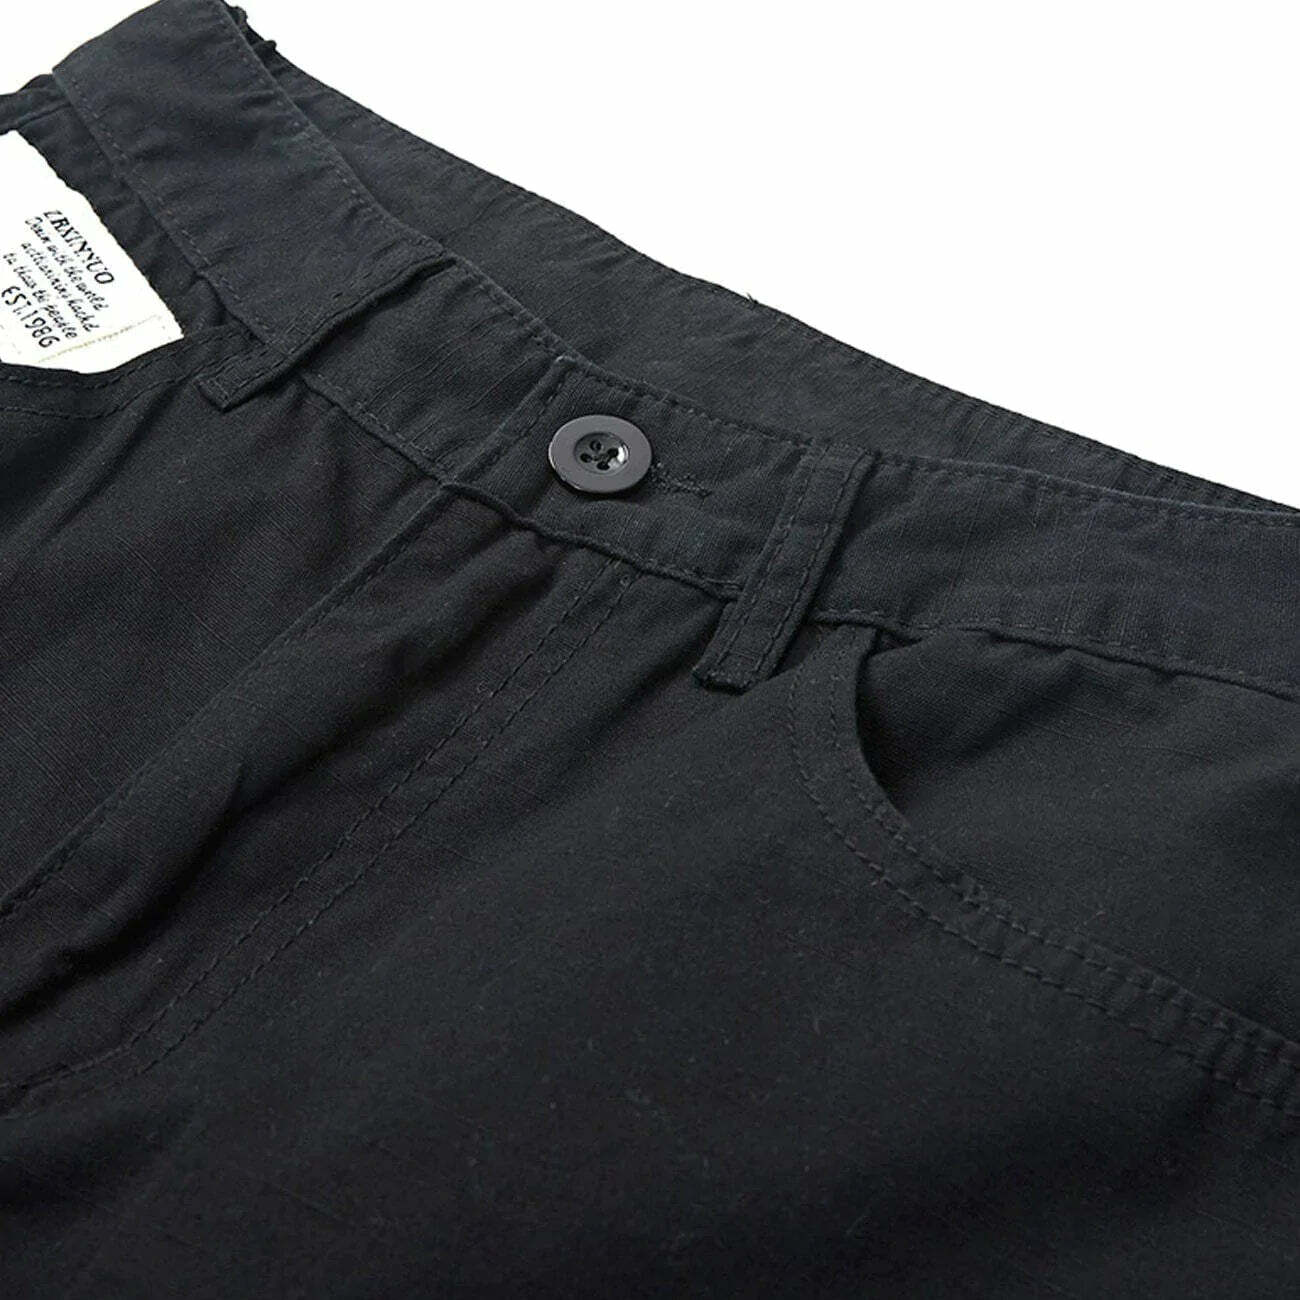 sleek pocket simple shorts urban streetwear essential 4580